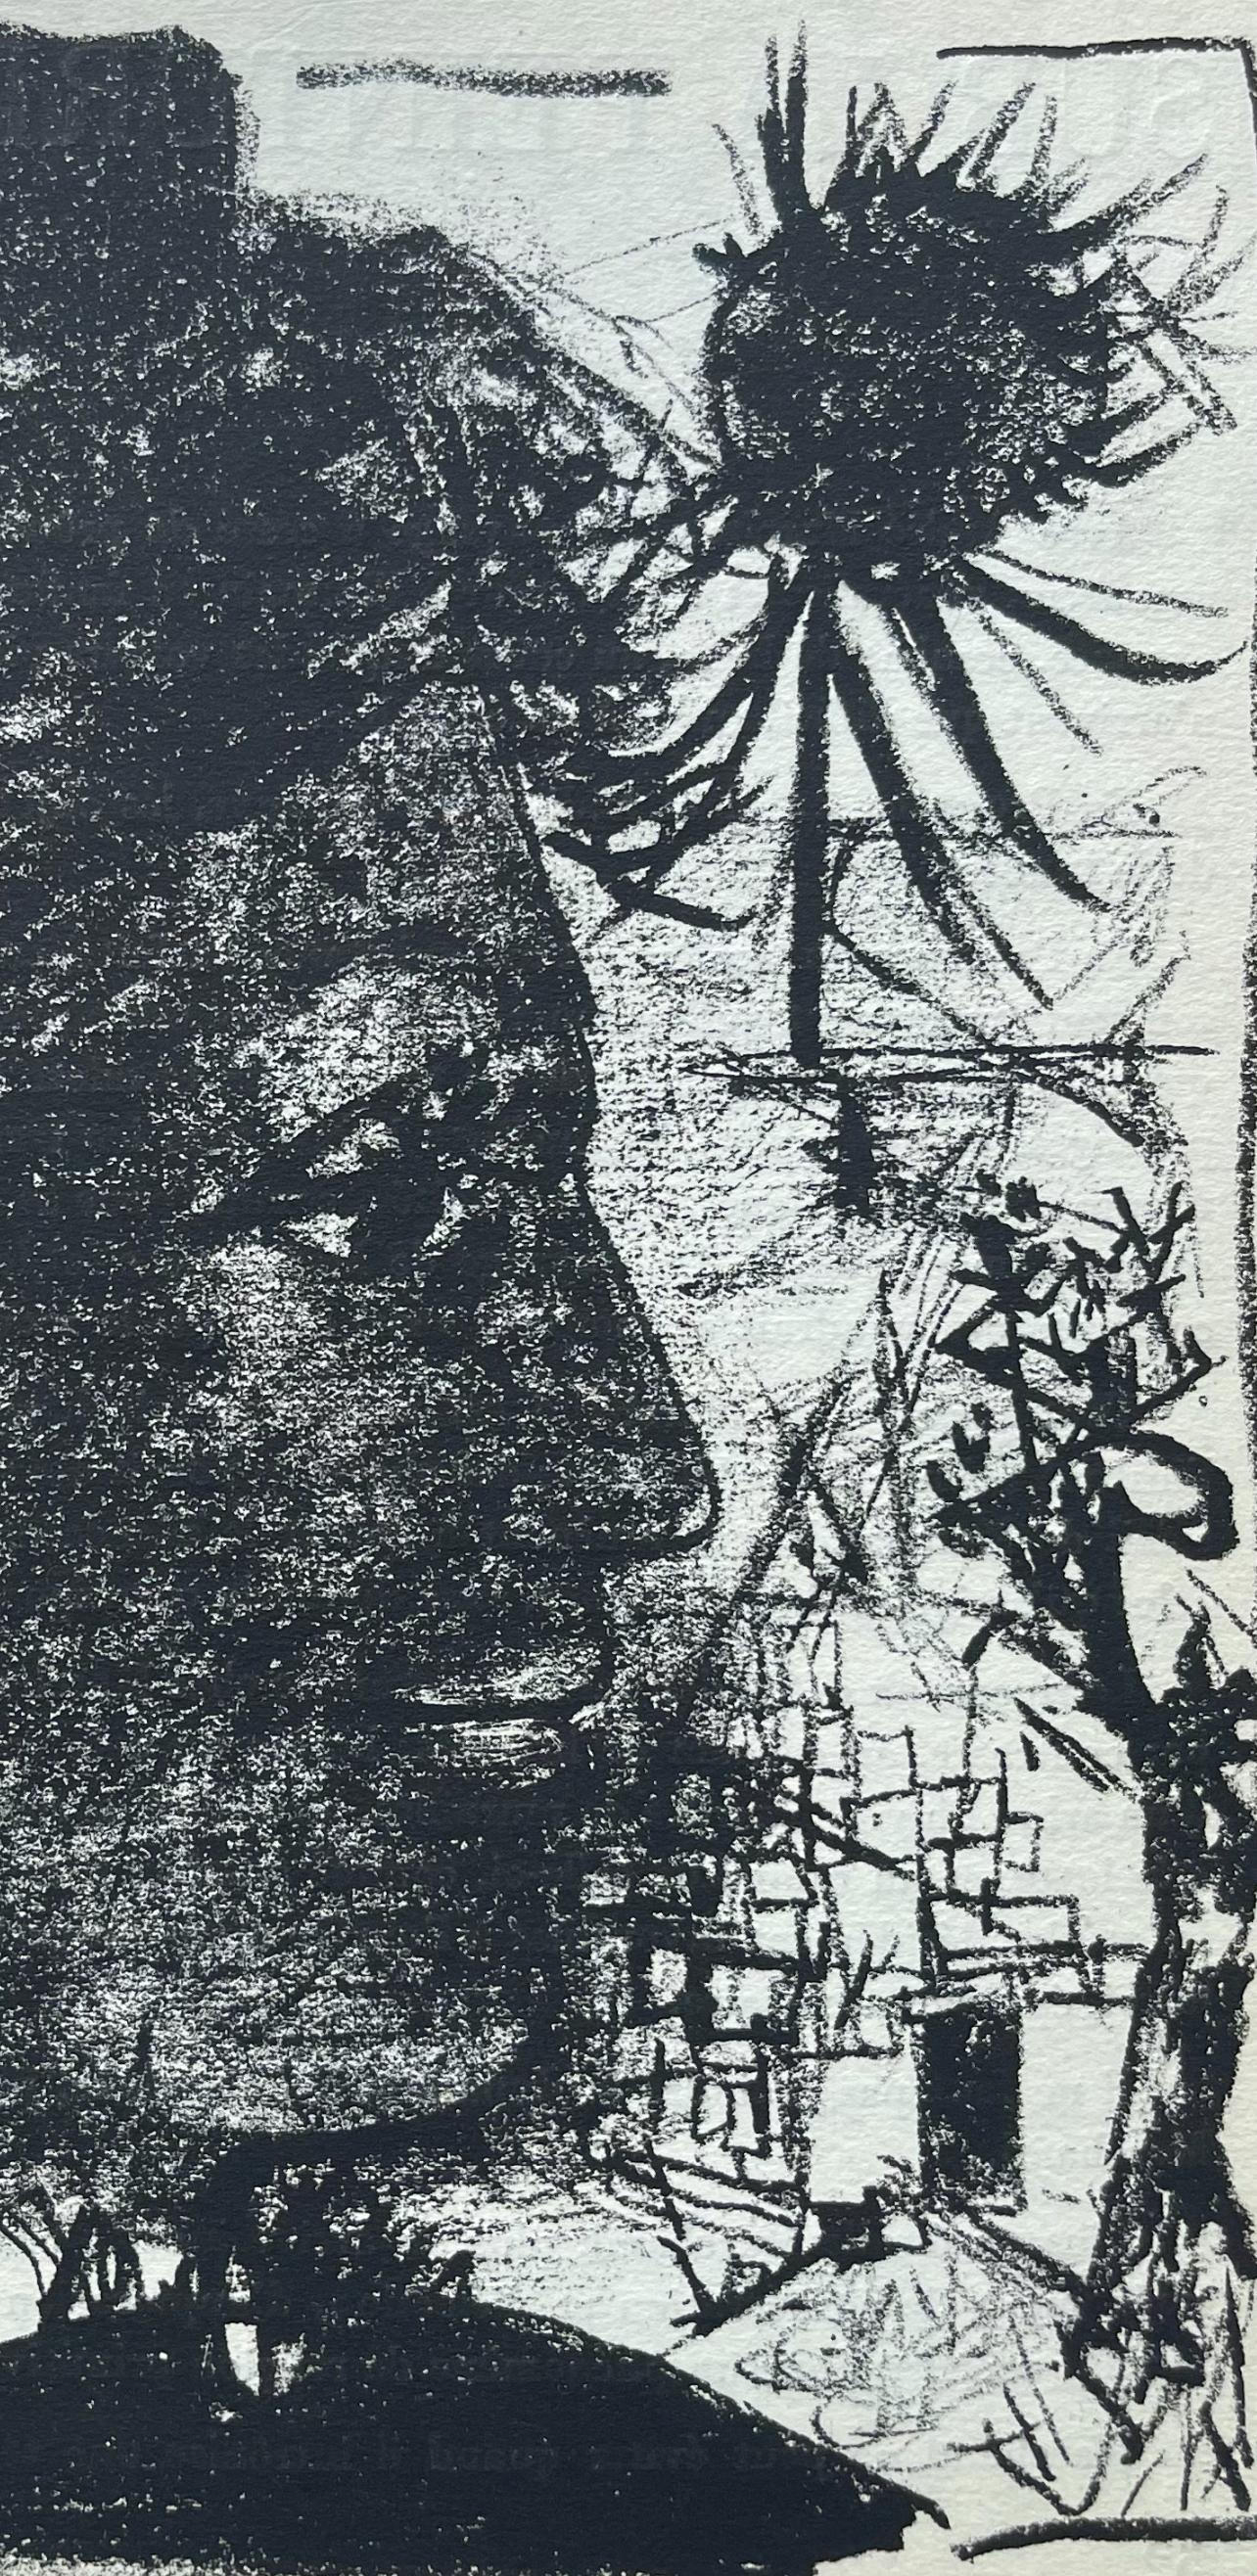 Marchand, Composition, pierre ã feu provence noire  (after) - Modern Print by André Marchand